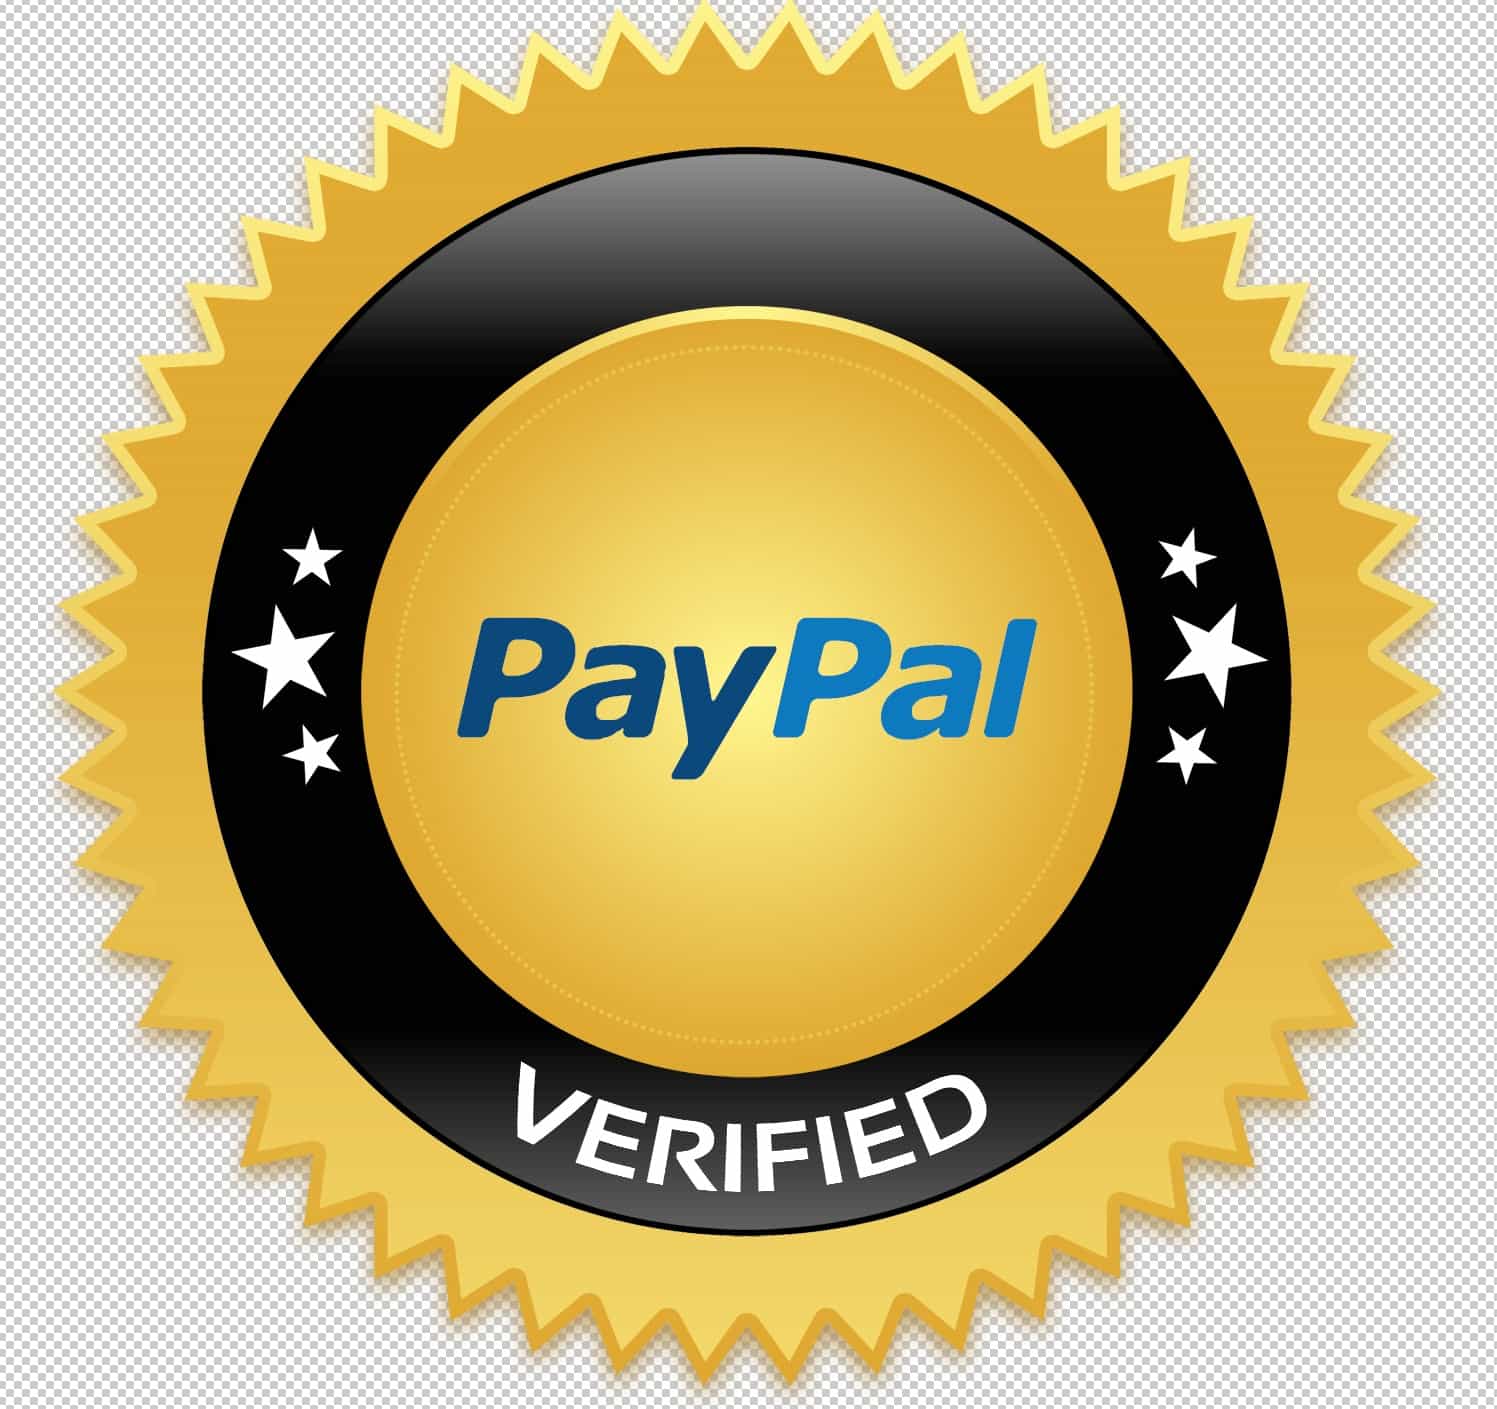 paypal verified 